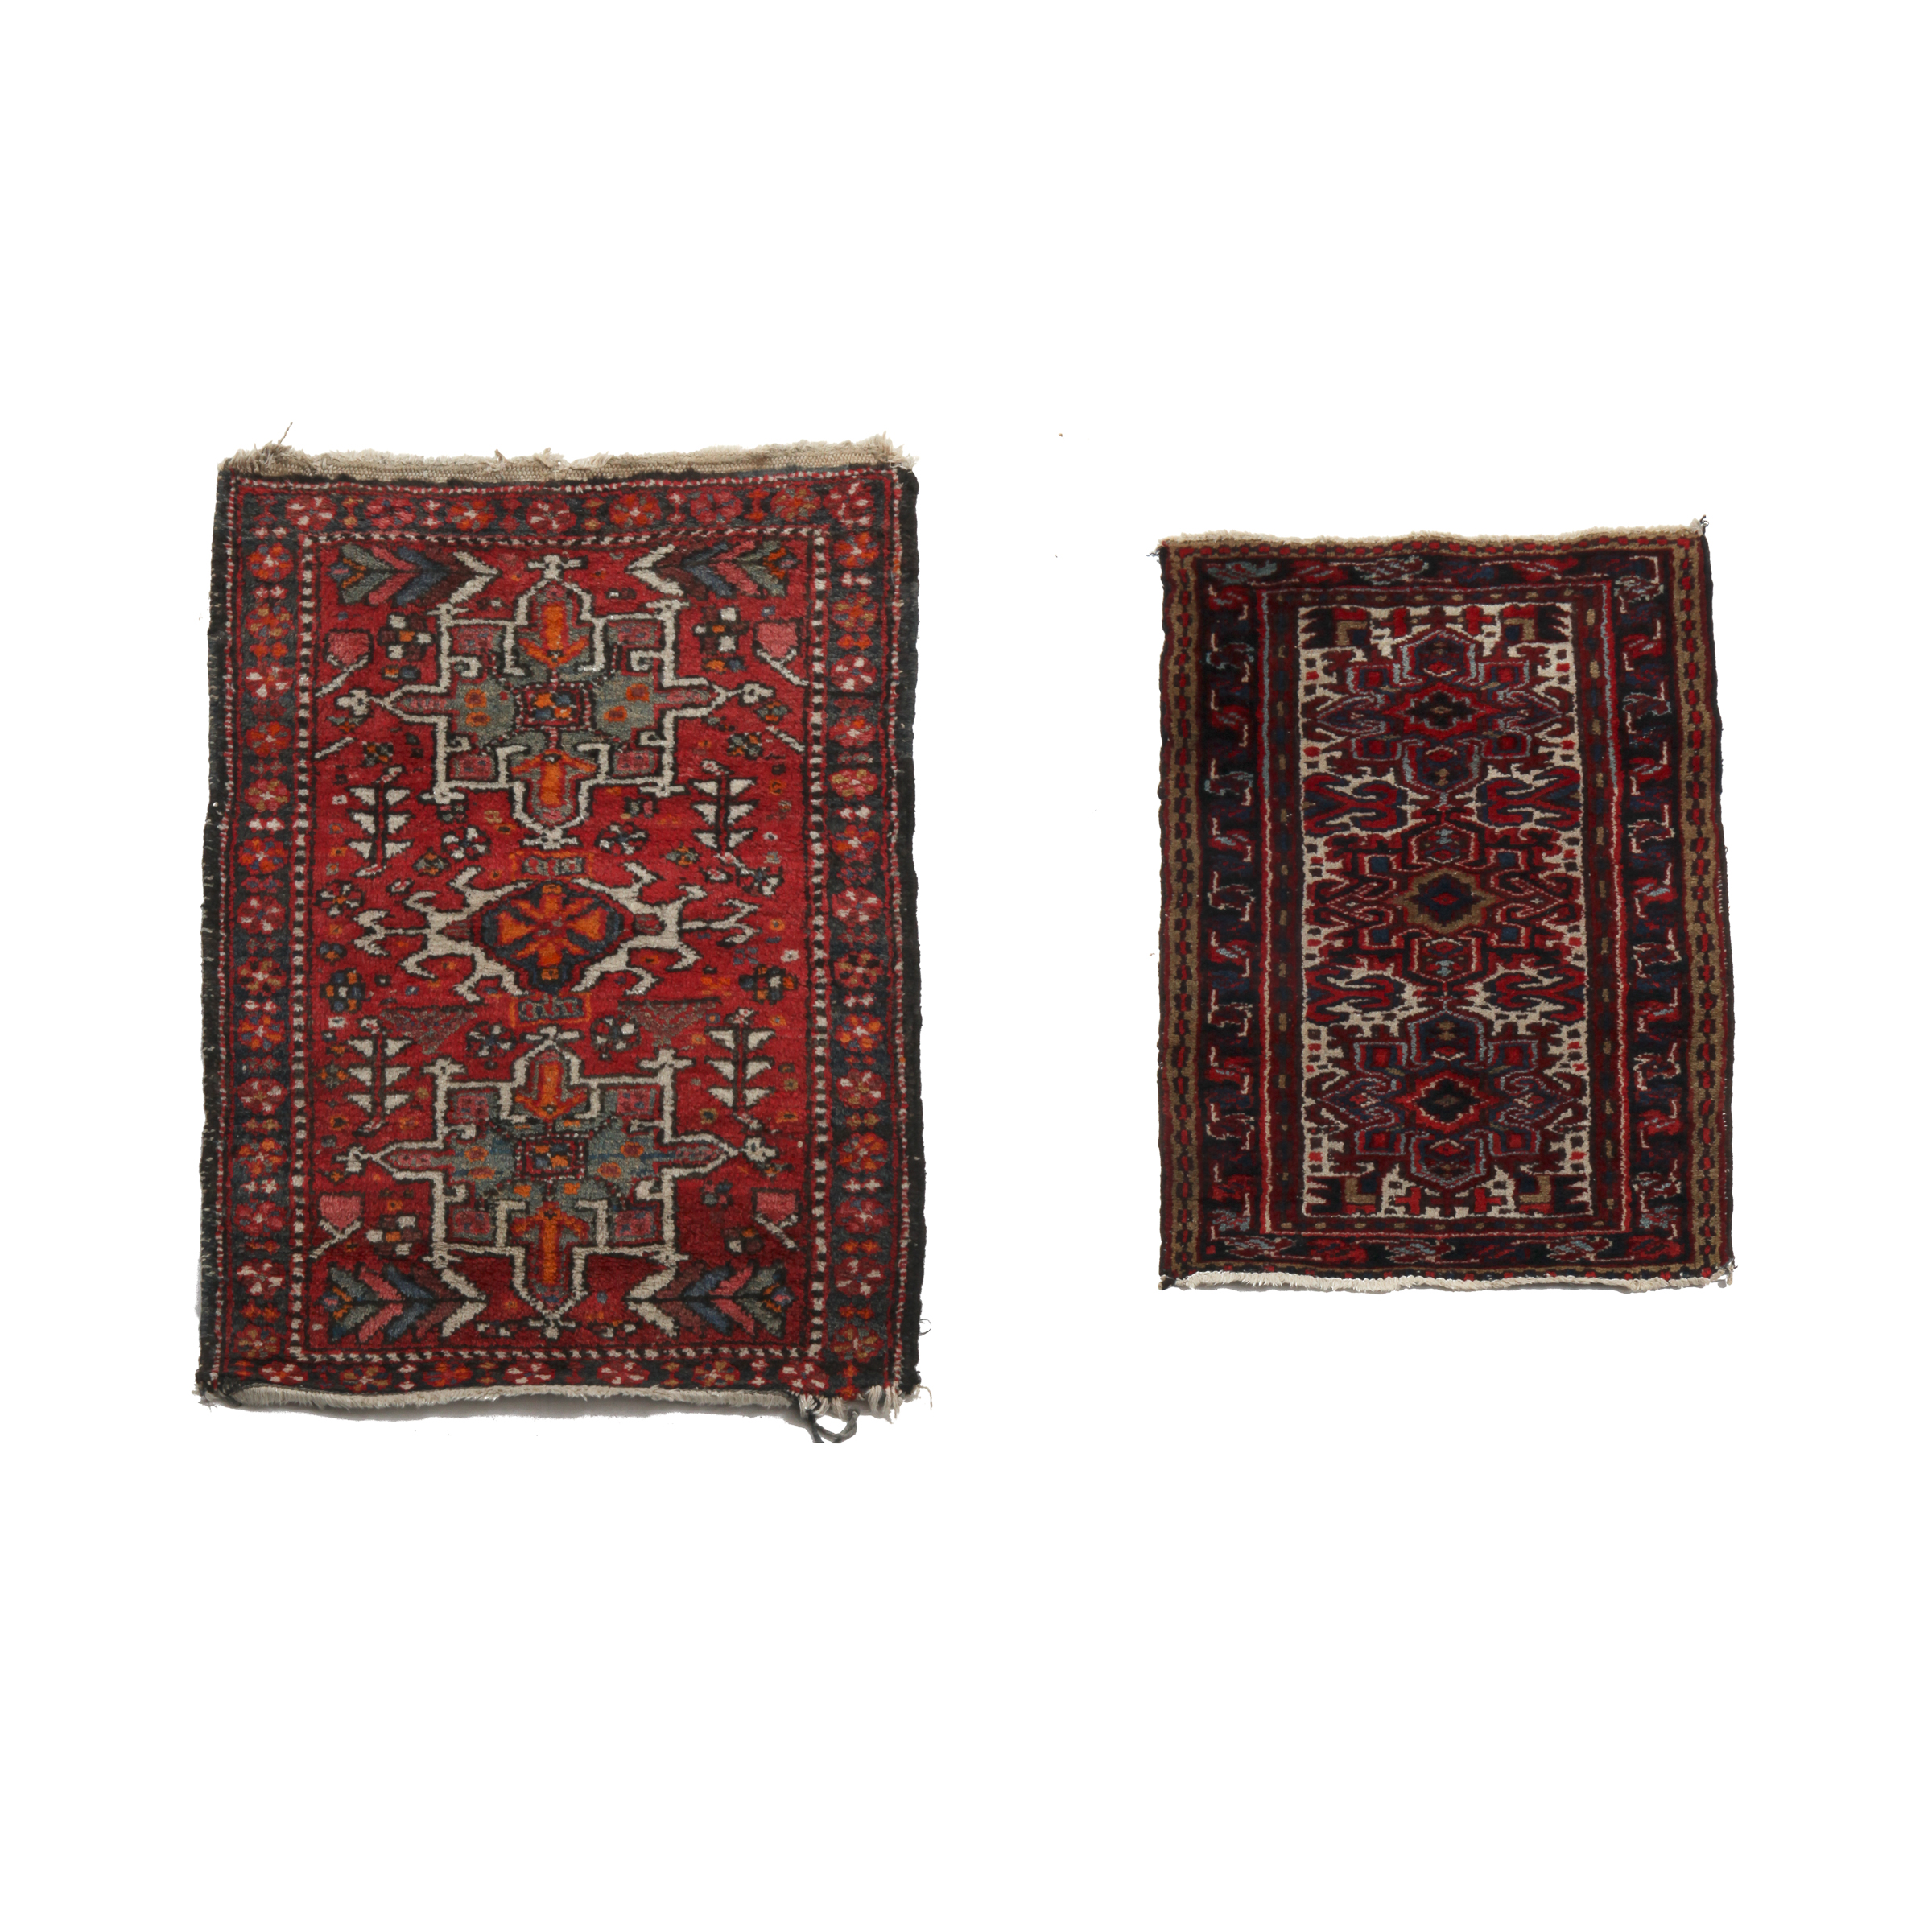 Two Karadge Mats, Persian, late 20th century